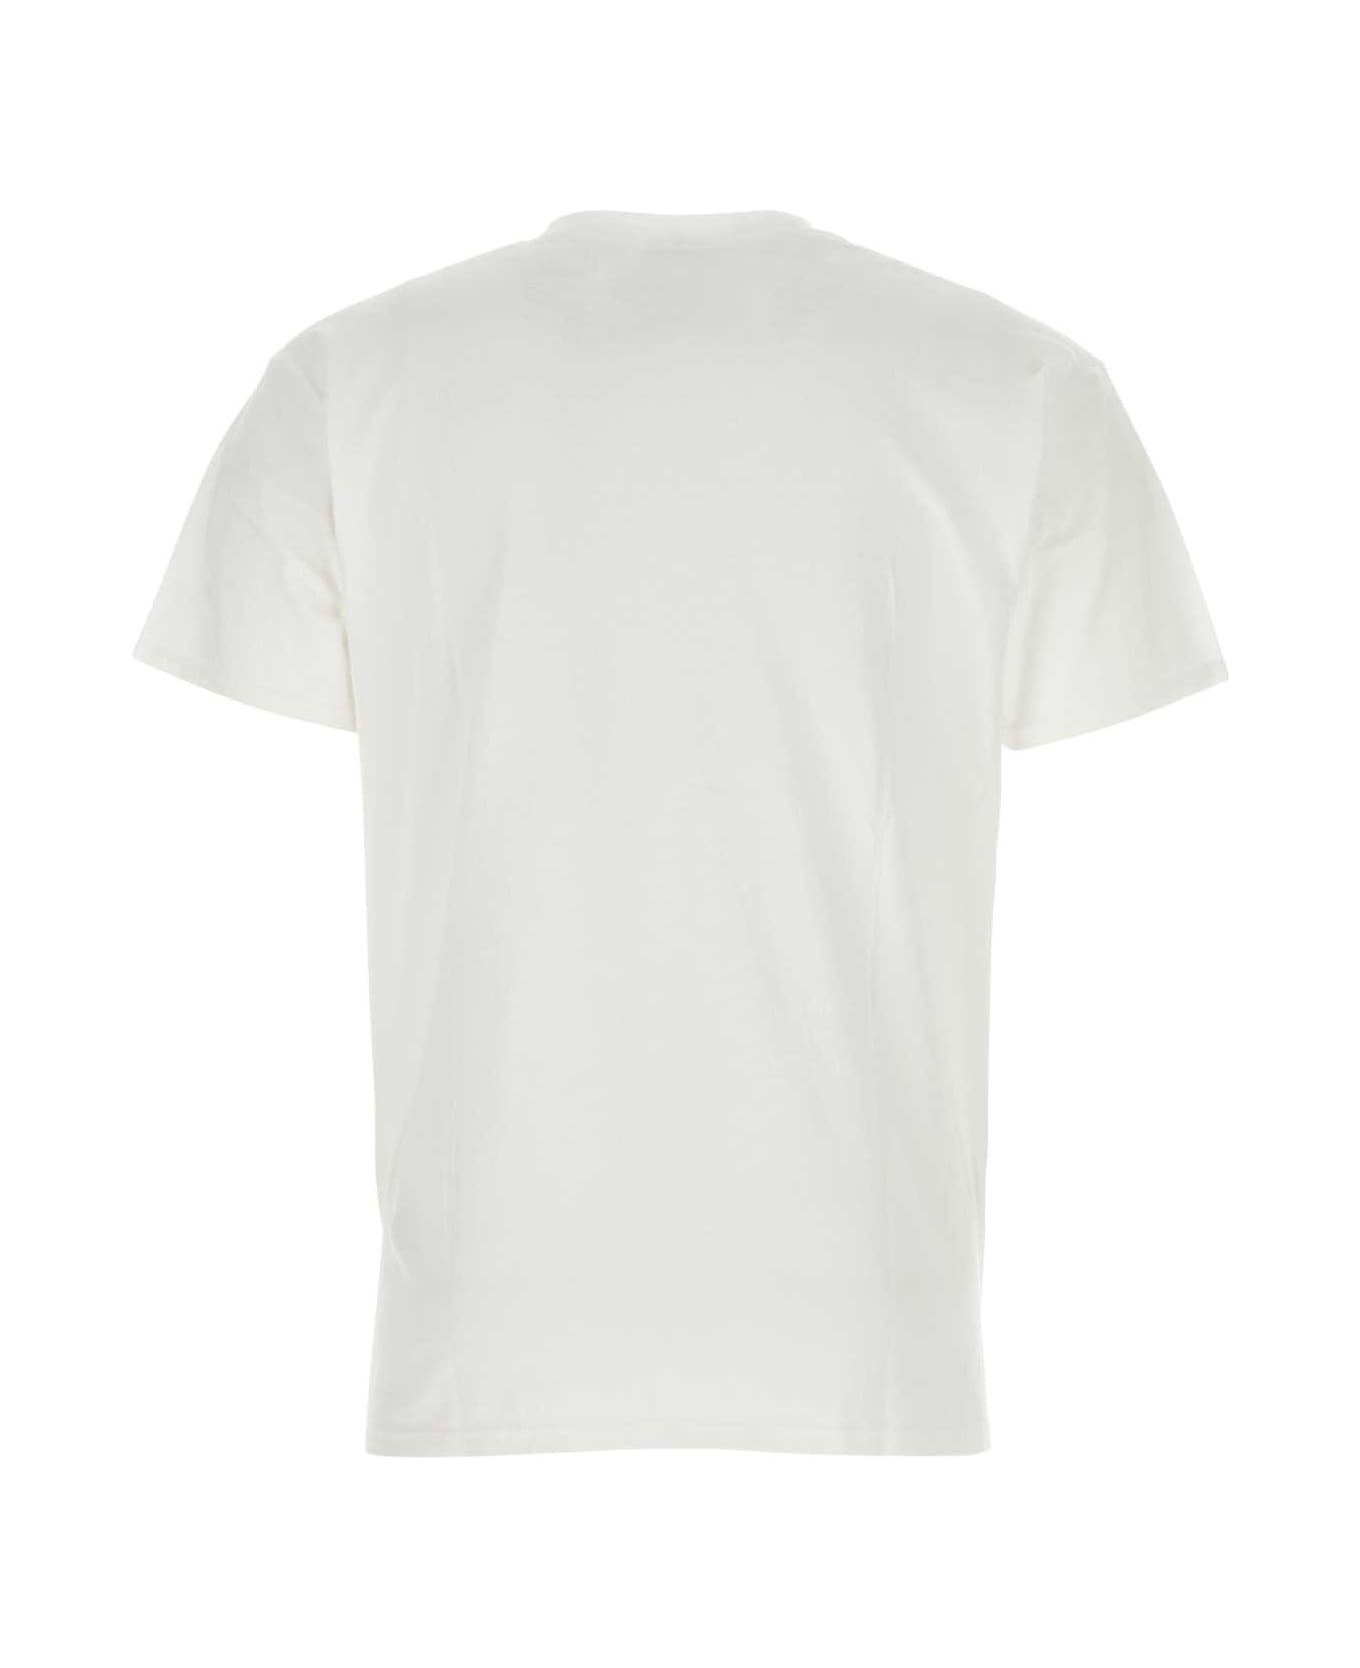 Wild Donkey White Cotton T-shirt - WD018